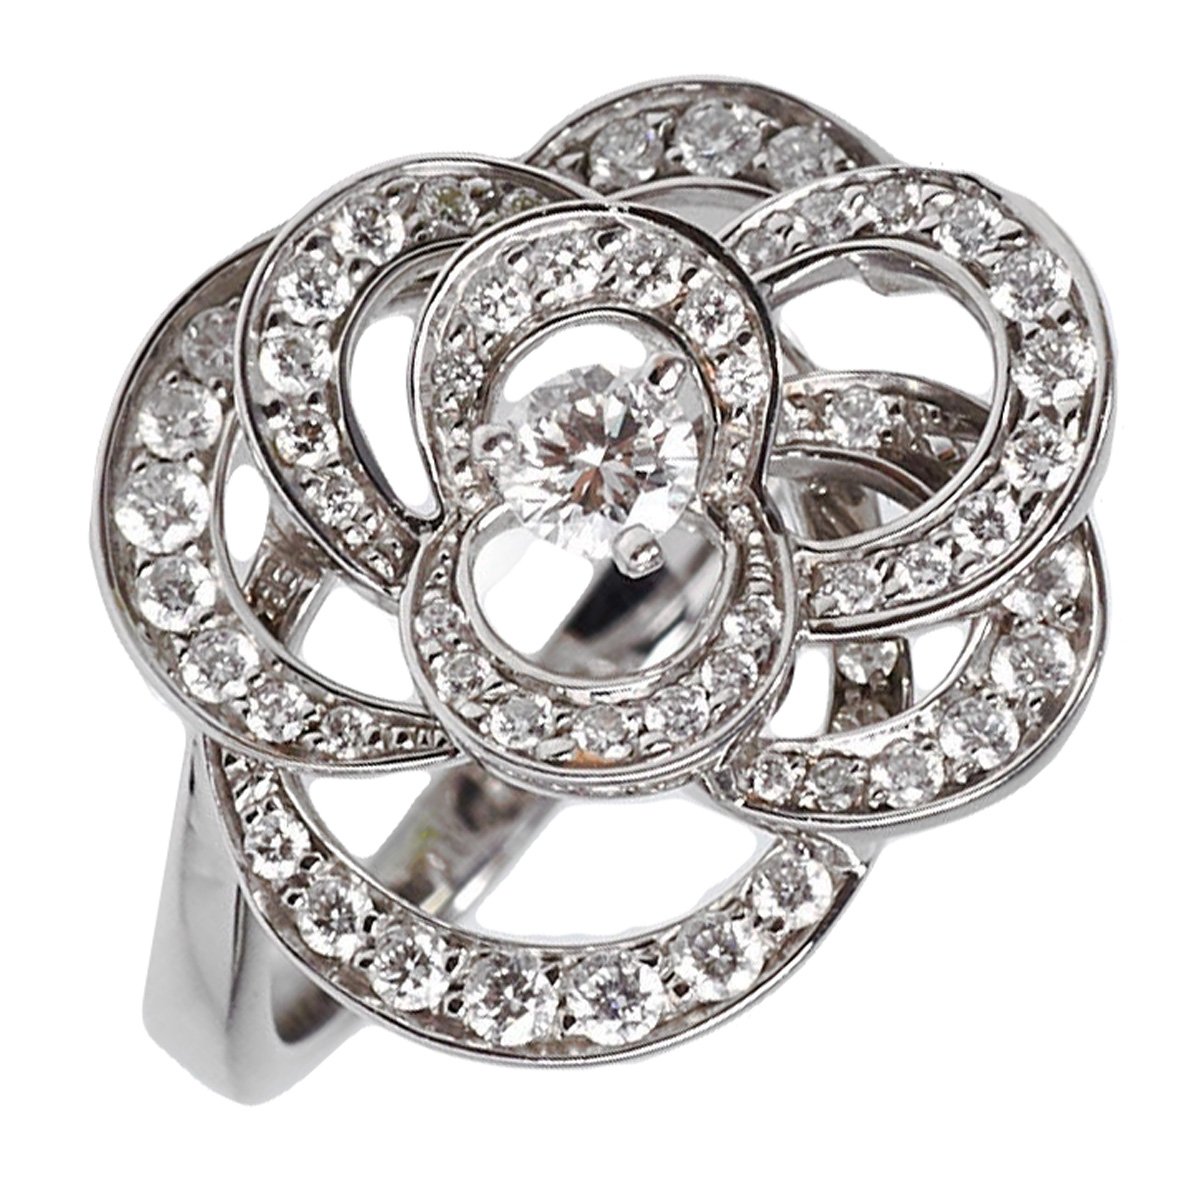 CHANEL Camellia Diamond 18k White Gold Bracelet Charm Watch